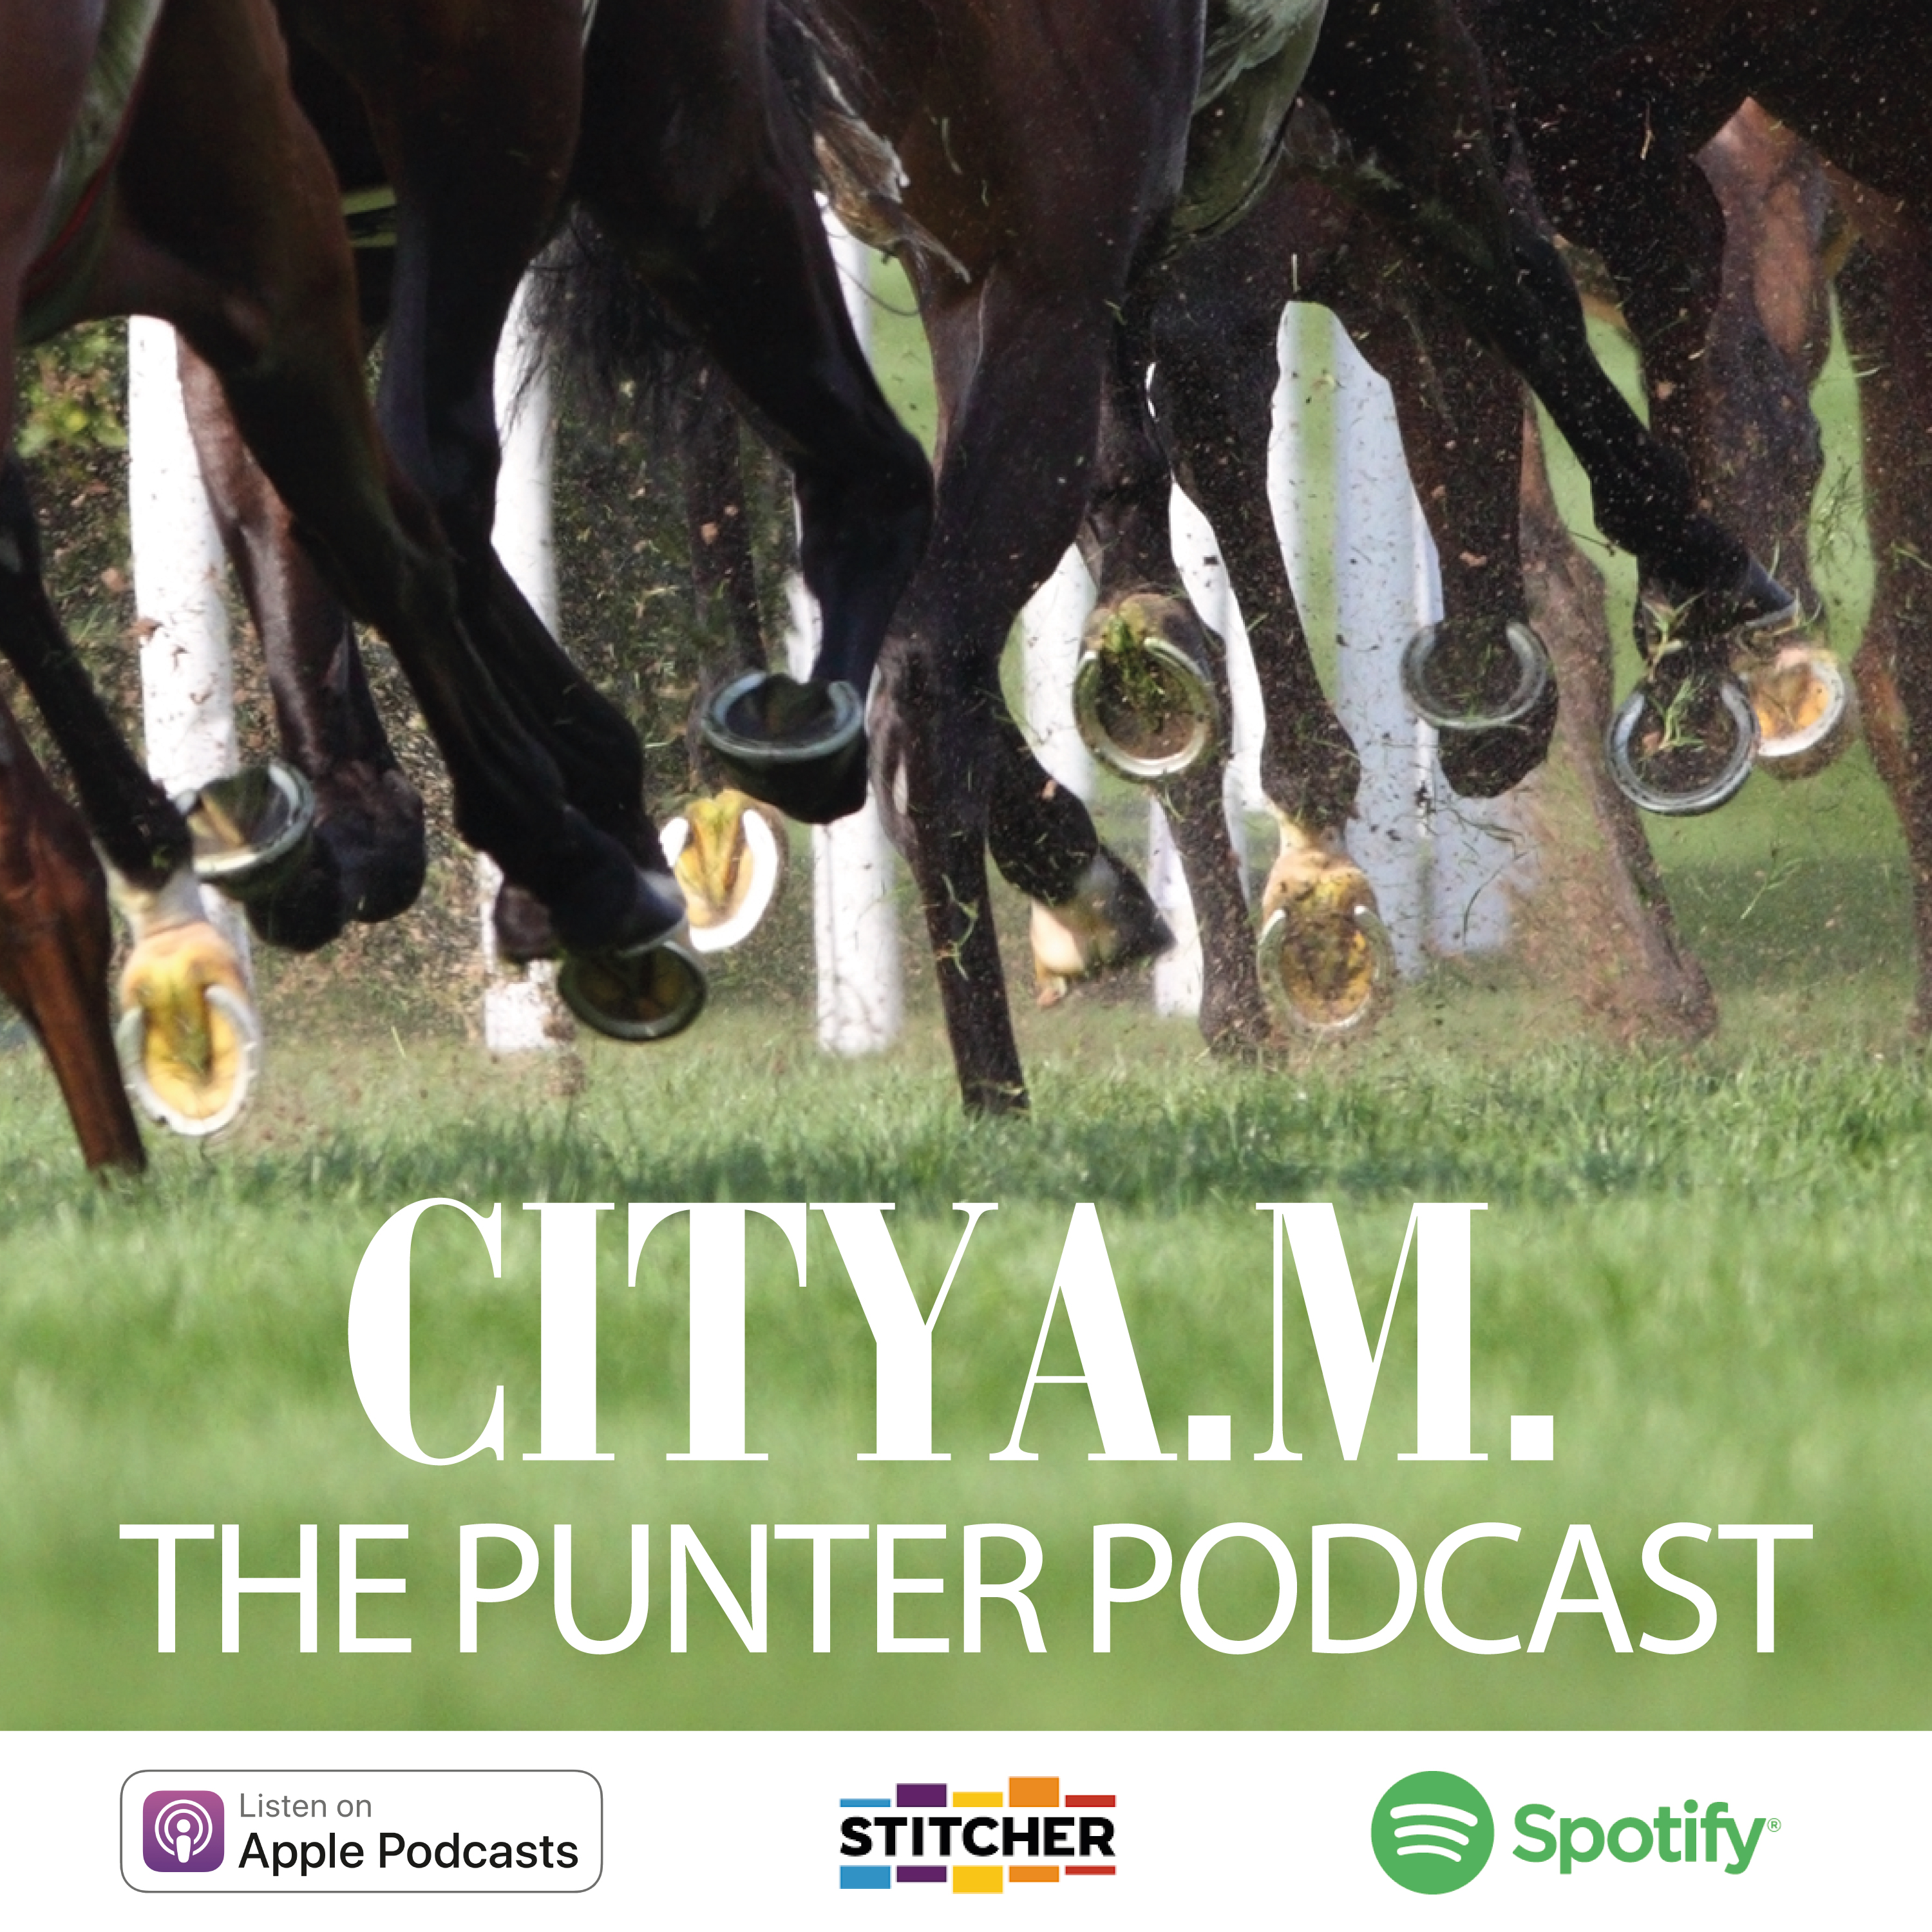 February 11th - Punter Podcast Summary